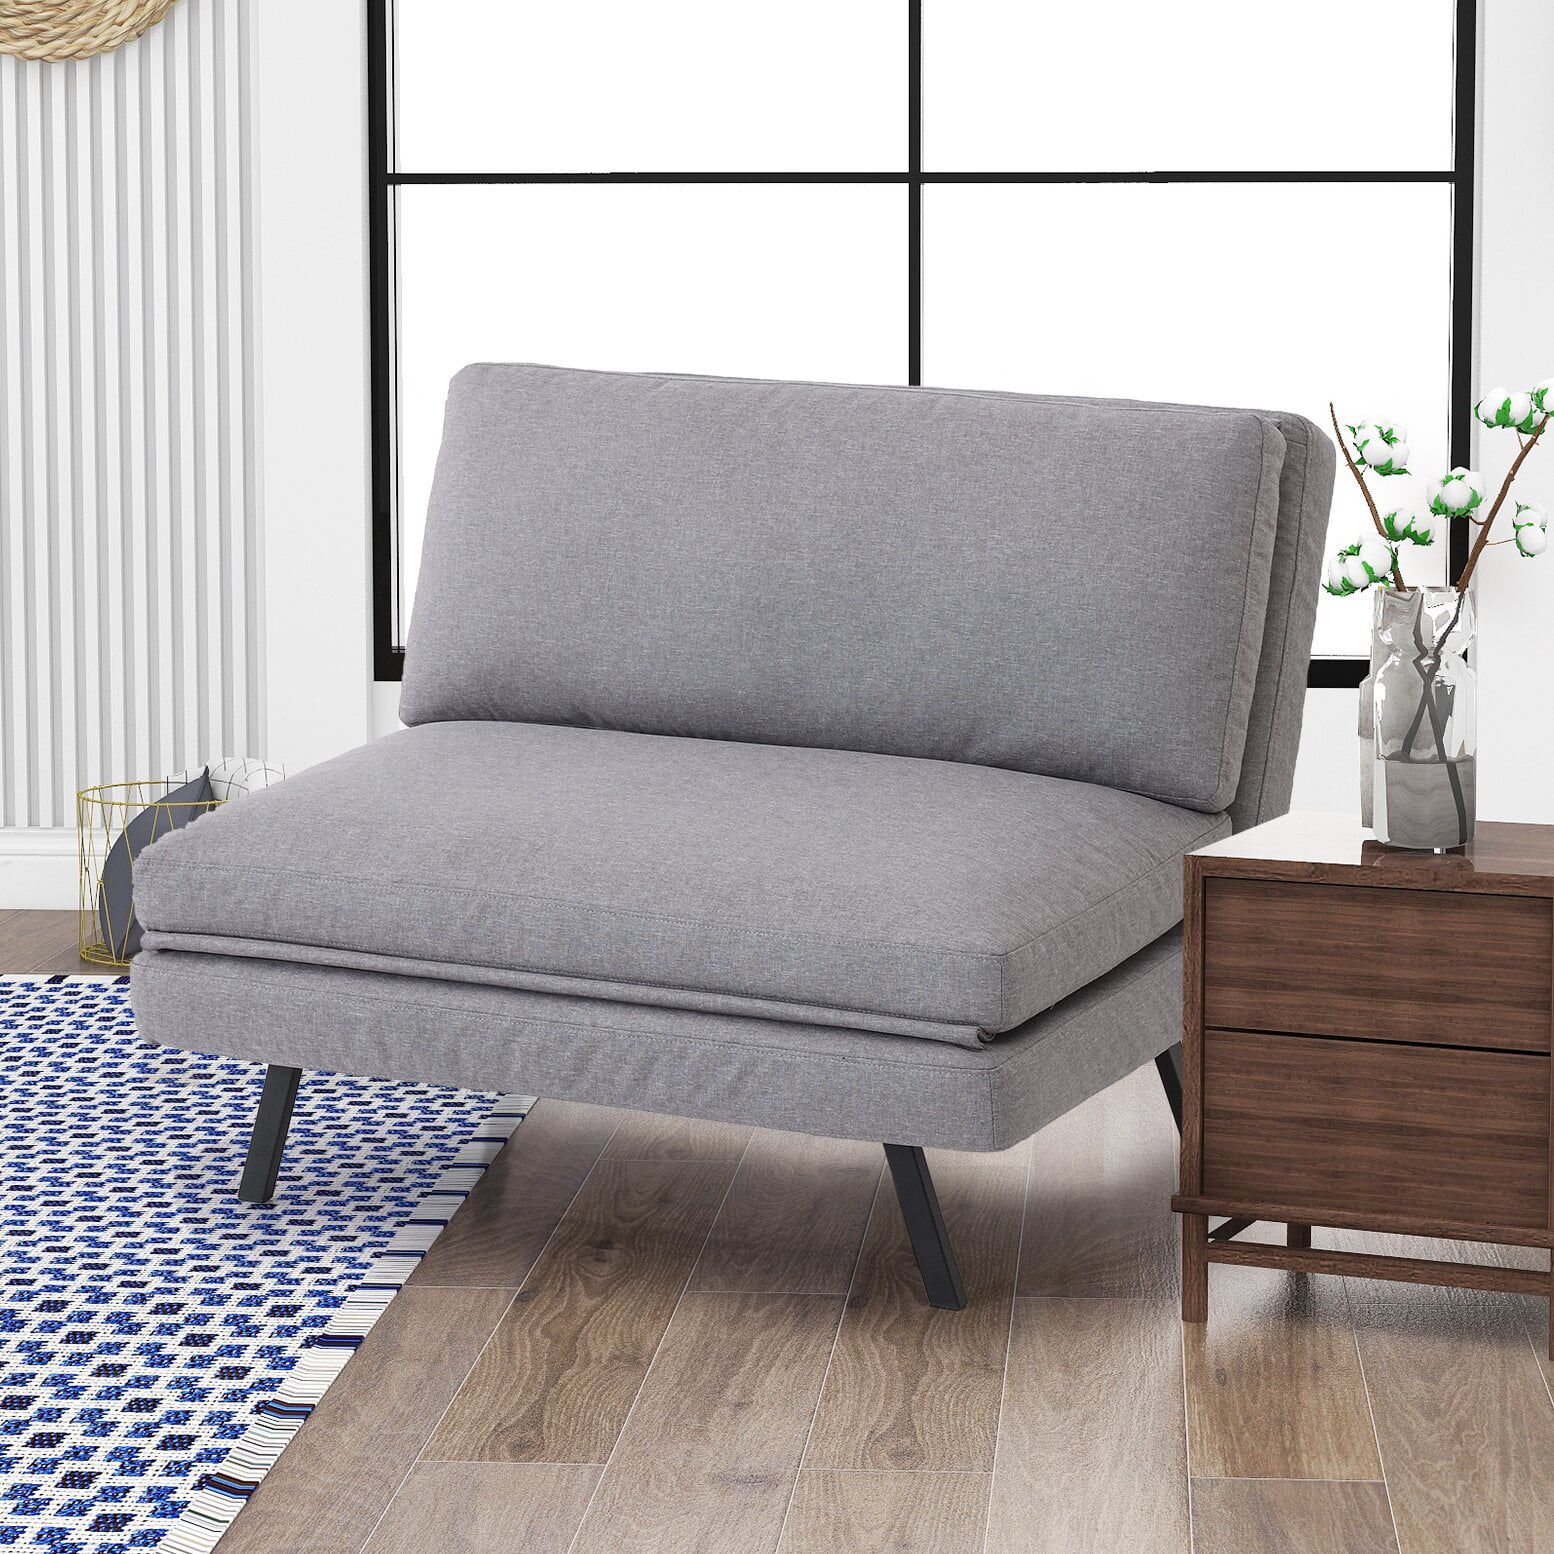 Smiaoer Tri Fold Fabric Convertible Futon, Sleeper Sofa Bed Flip Chair Regarding 4 In 1 Convertible Sleeper Chair Beds (View 19 of 20)